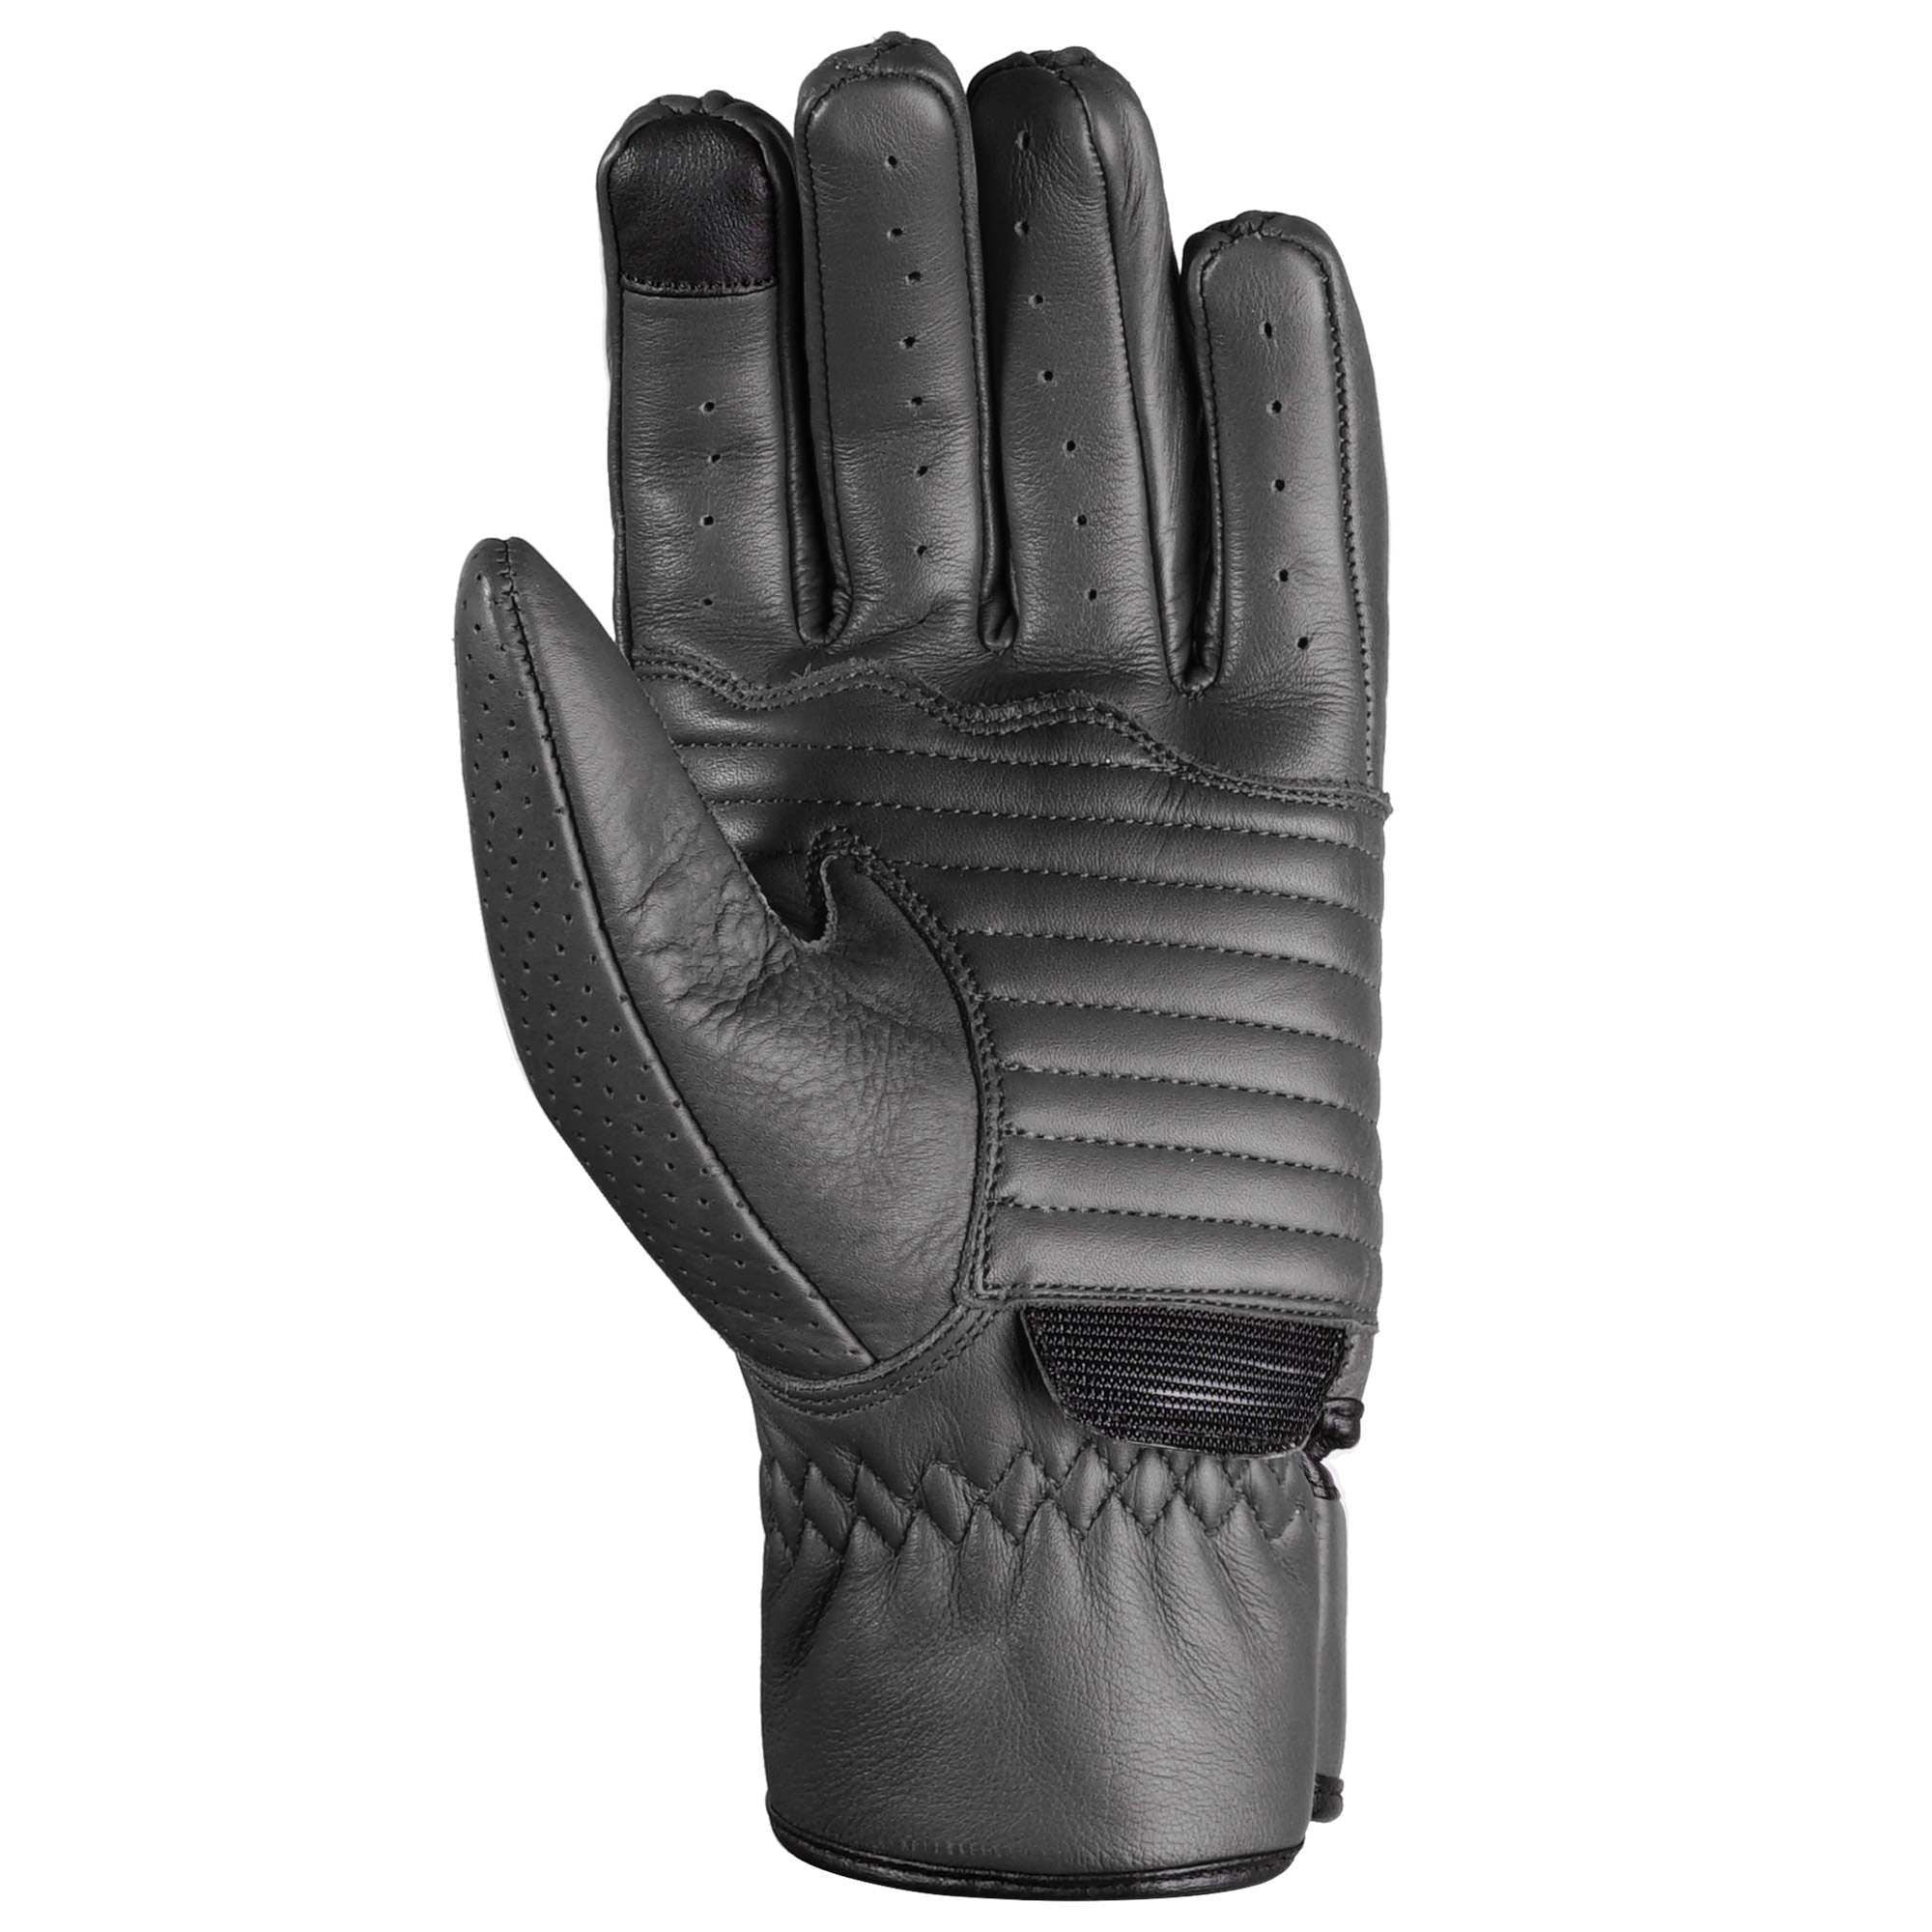 78 Motor co. Speed Gloves - MkIII Farina Grey